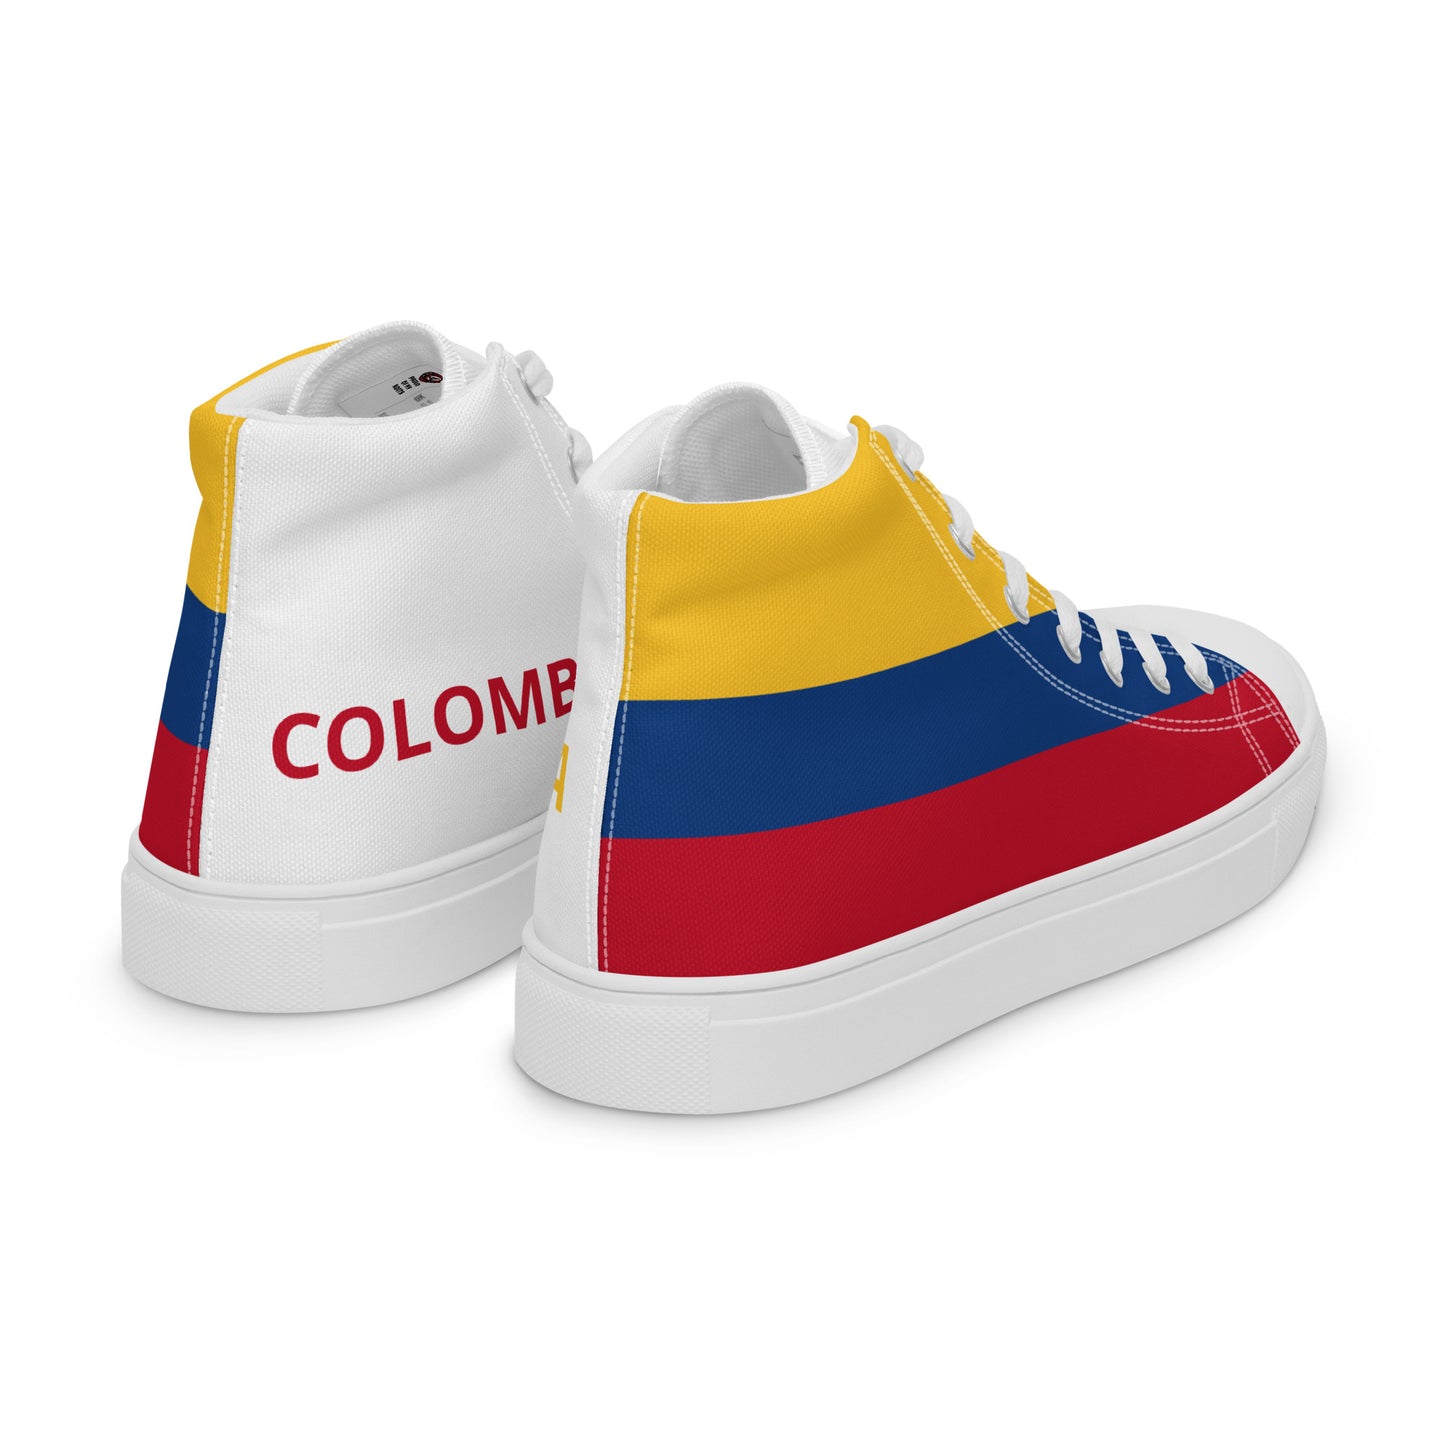 Colombia - Men - Bandera - High top shoes